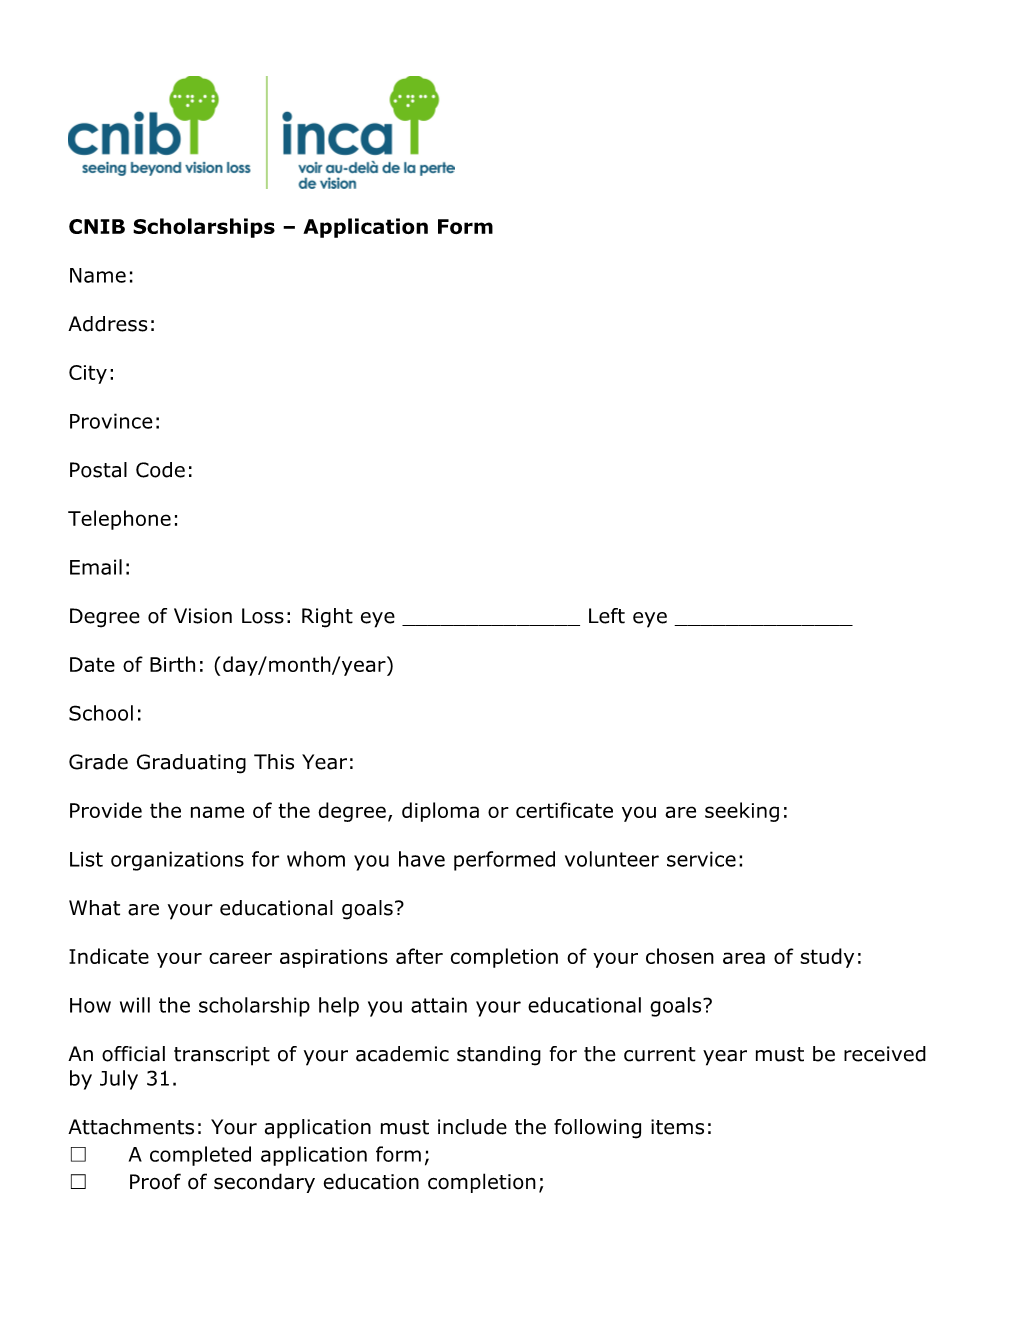 CNIB Scholarships Application Form